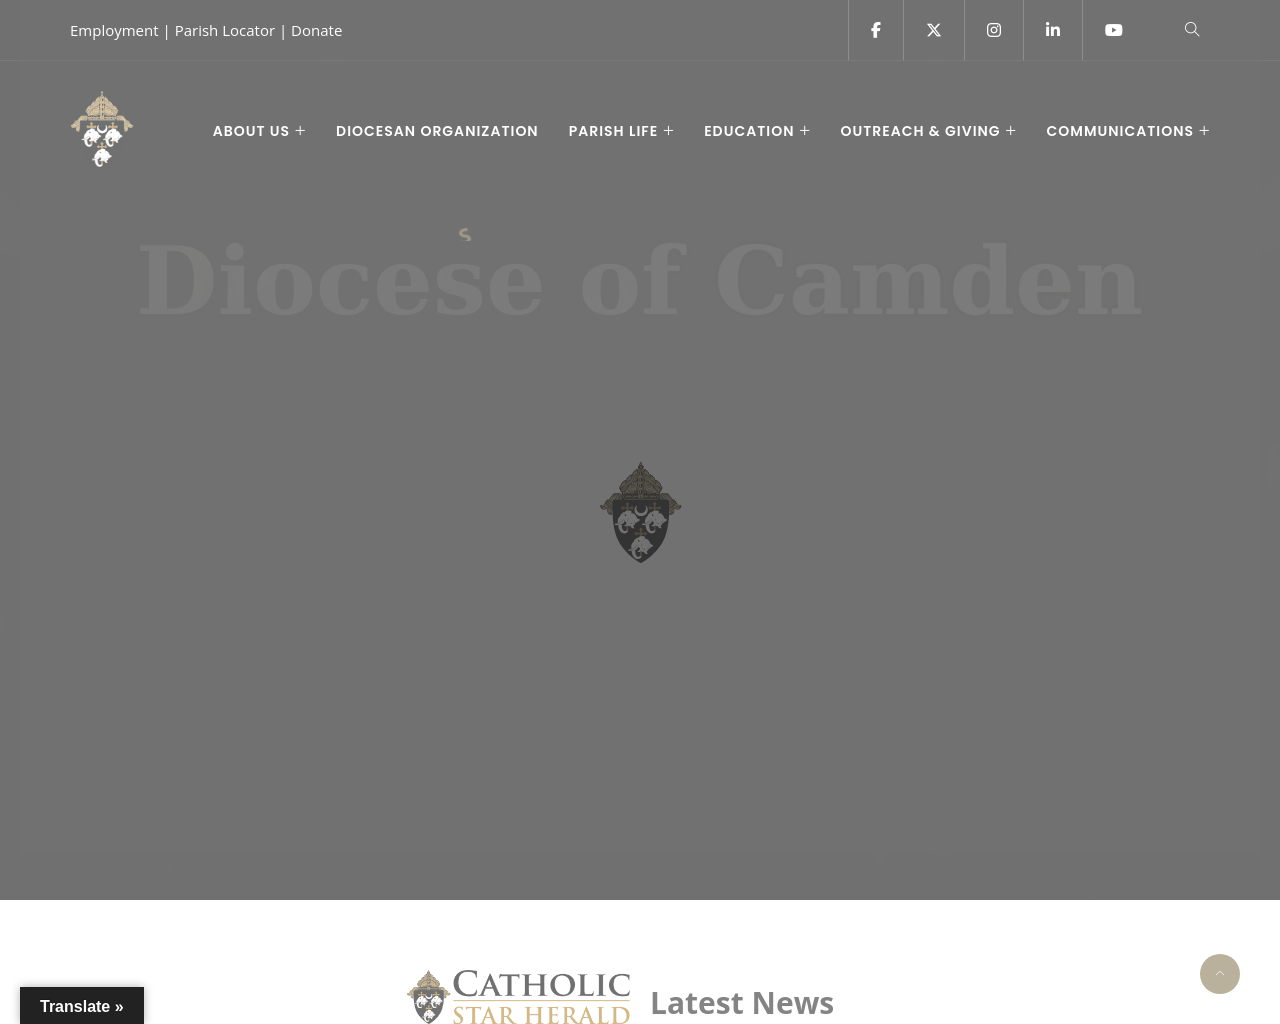 camdendiocese.org